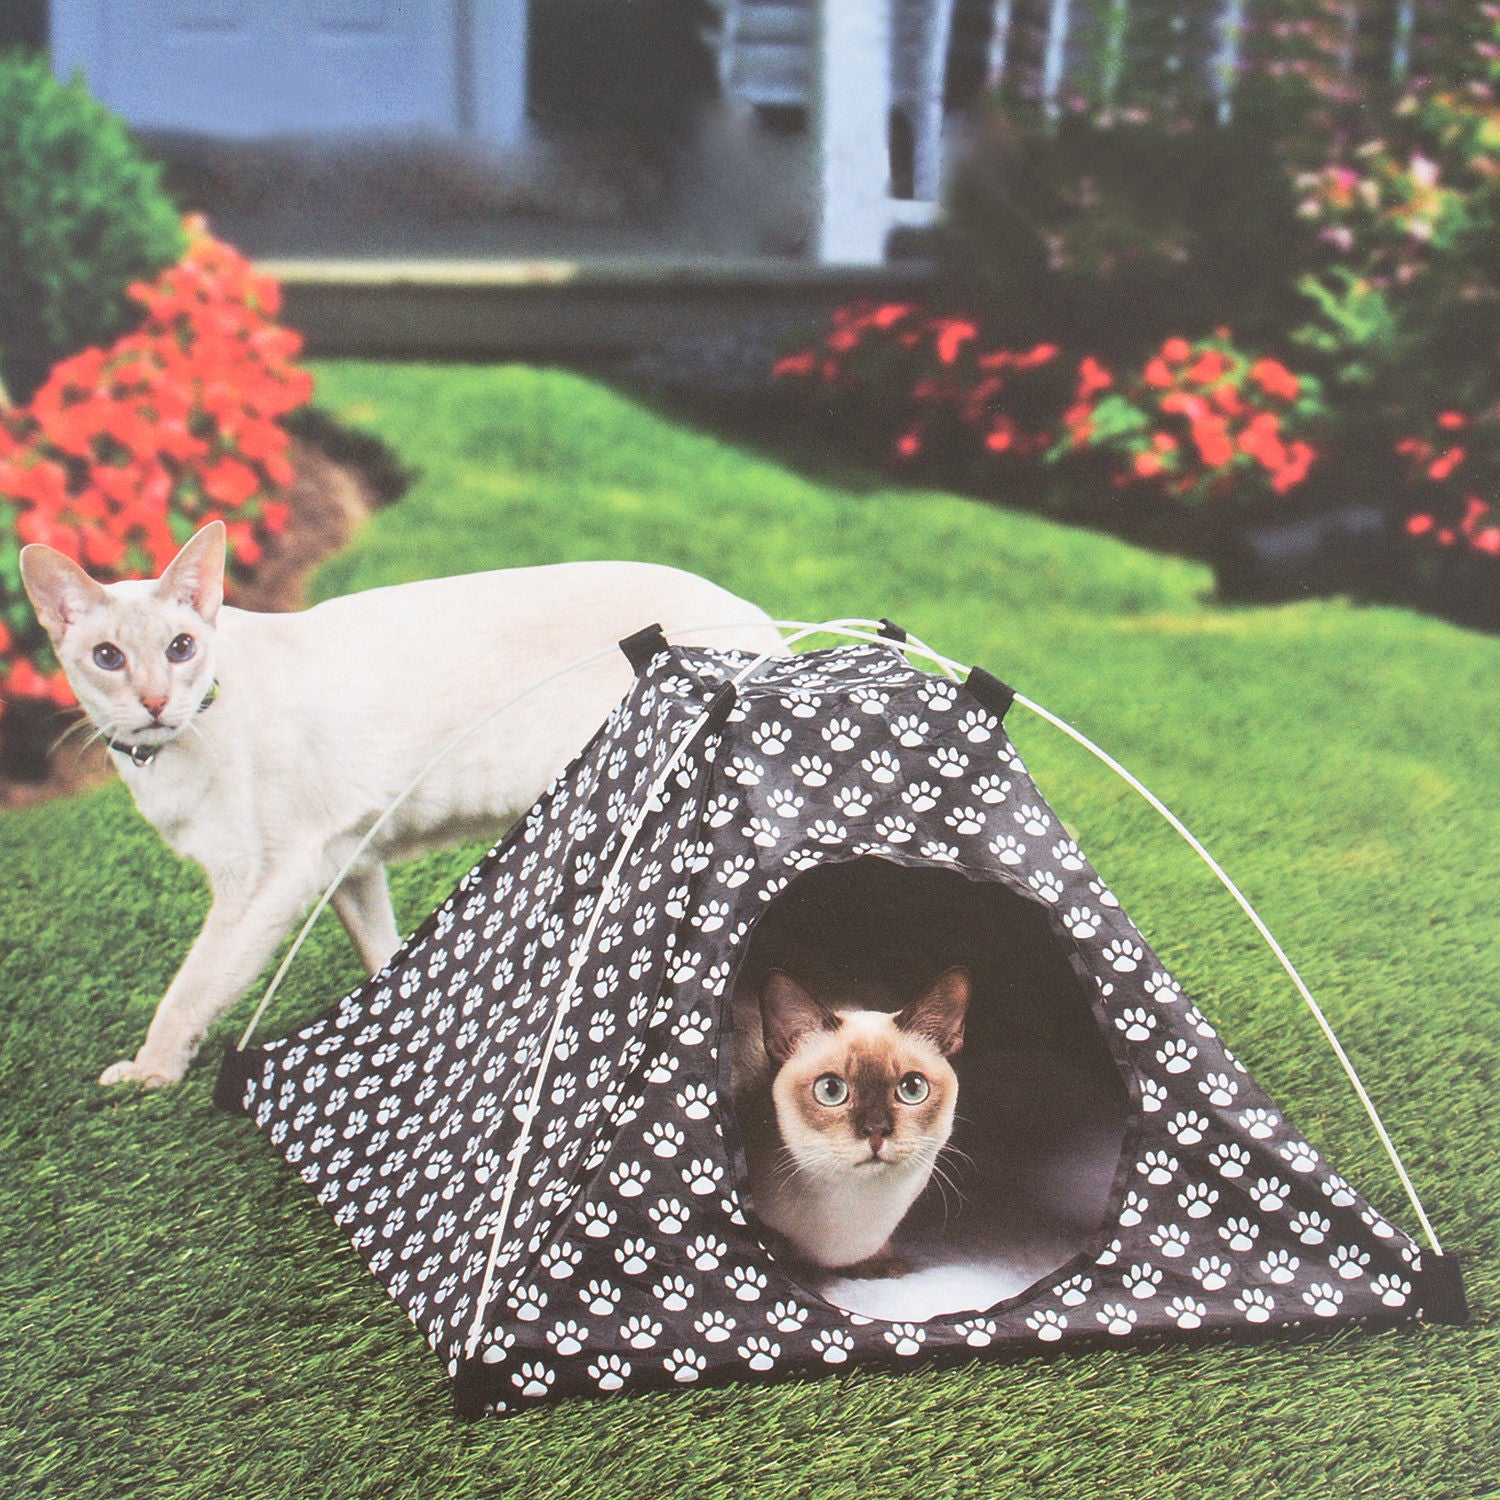 Portable Cat Pet Tent - Small Dog Puppy Playpen For Outdoor / Indoor